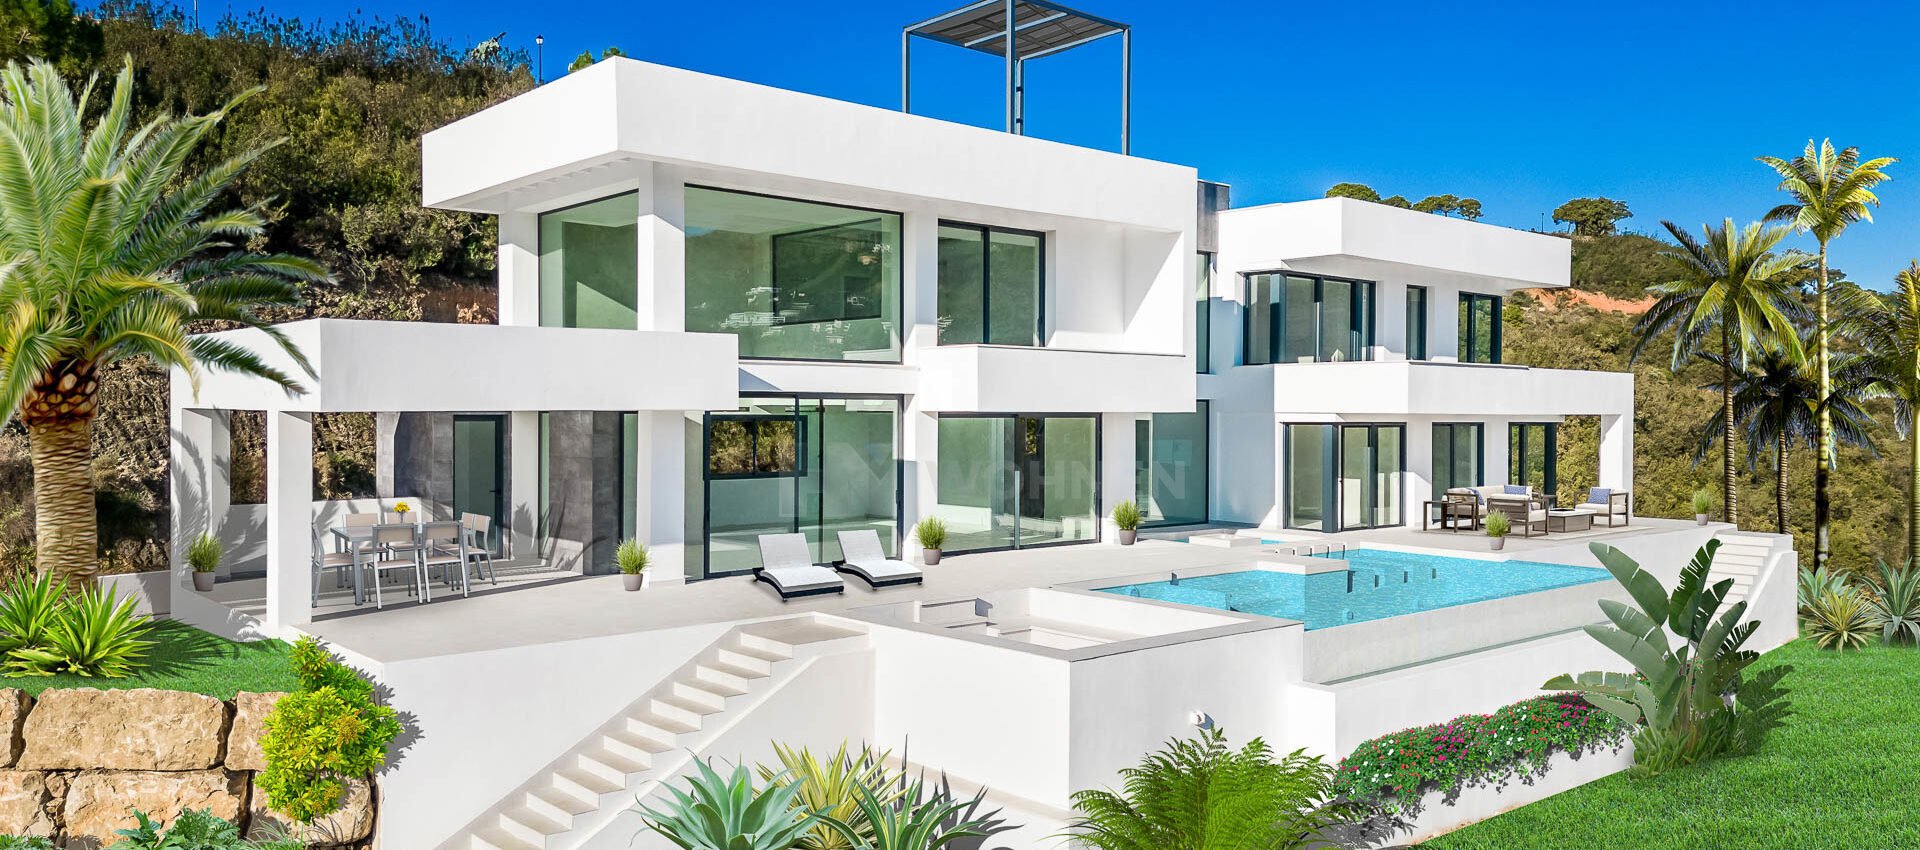 New modern villa under construction with stunning open views